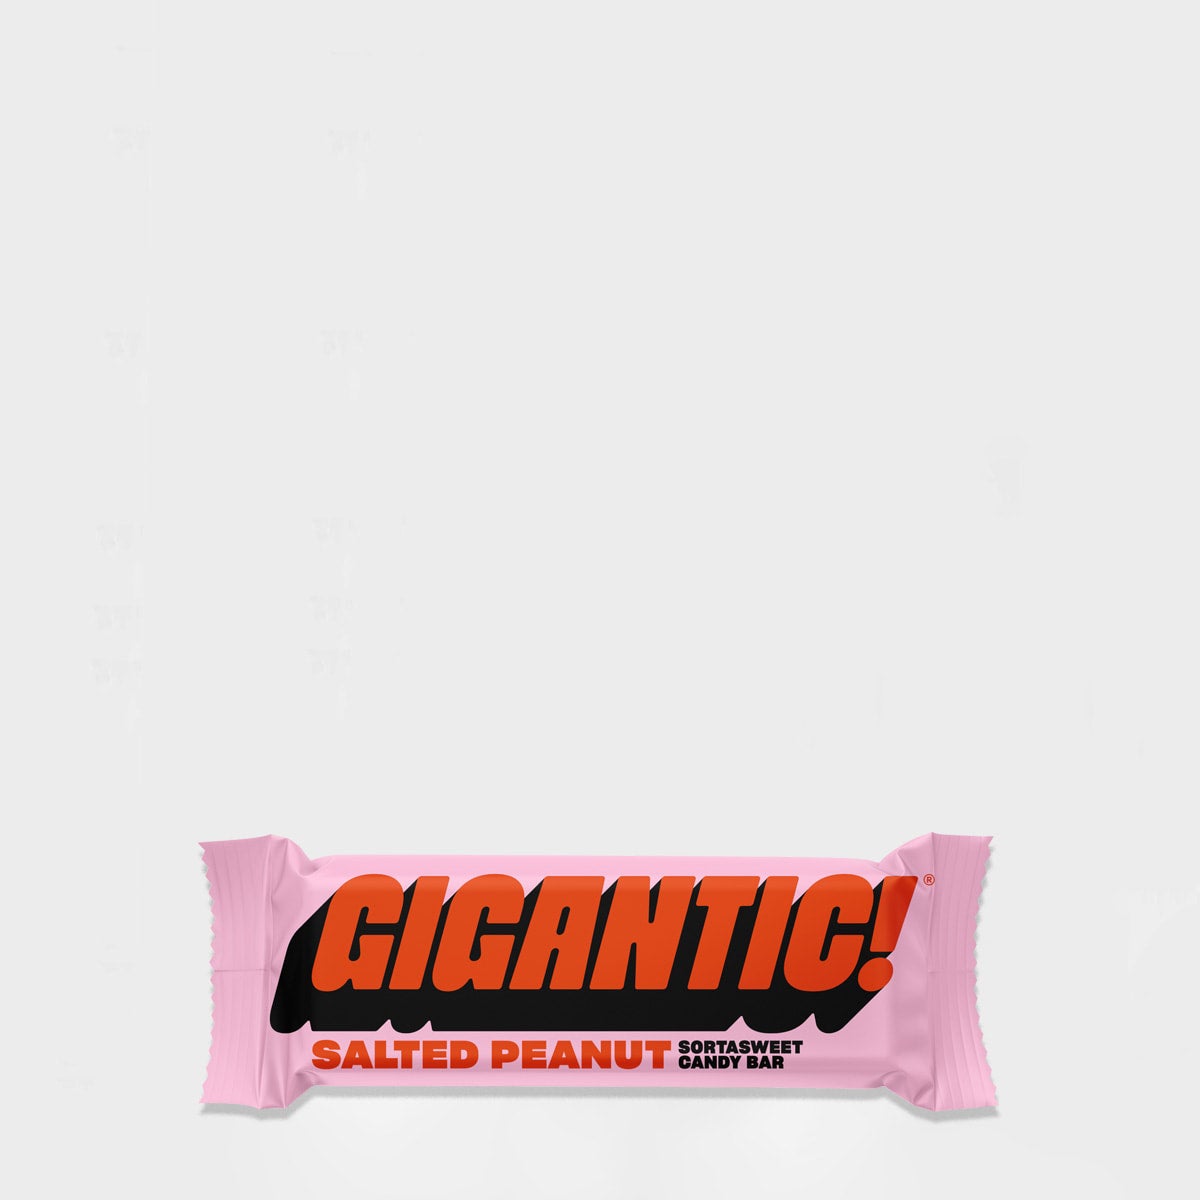 Gigantic! Salted Peanut Candy Bar